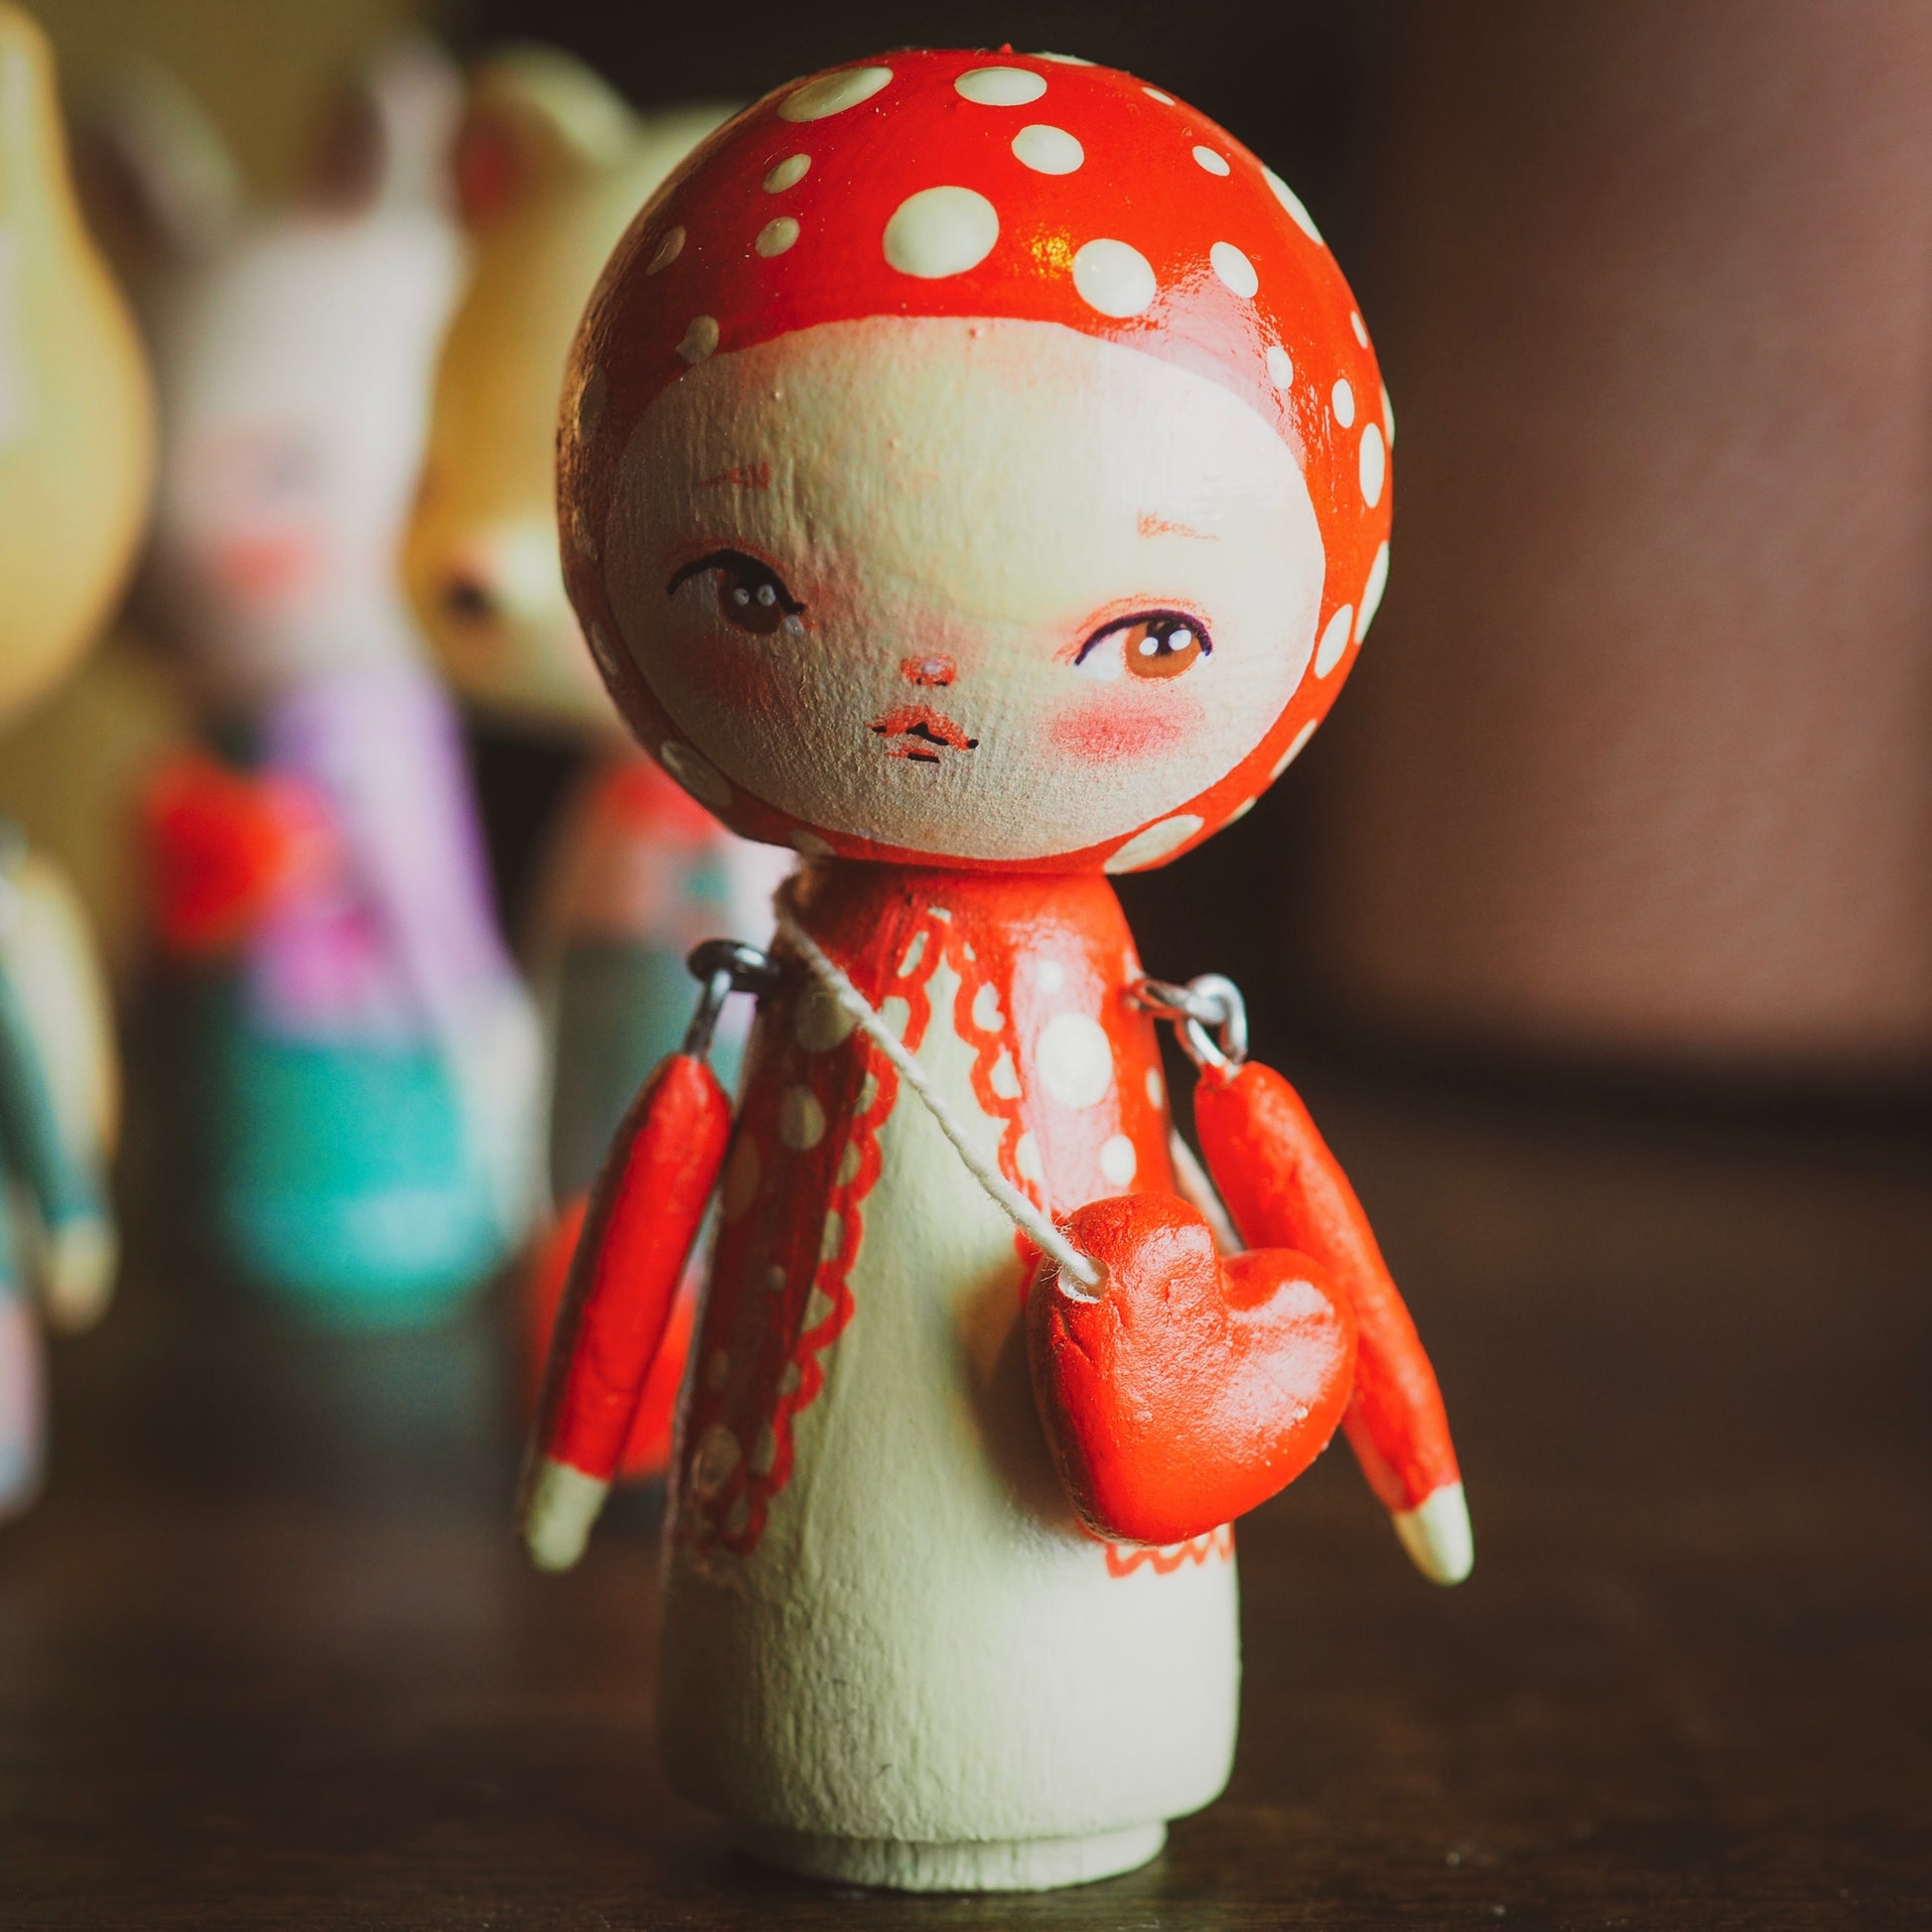 MISHA - An original handmade wooden kokeshi art doll by Danita, Miniature Dolls by Danita Art